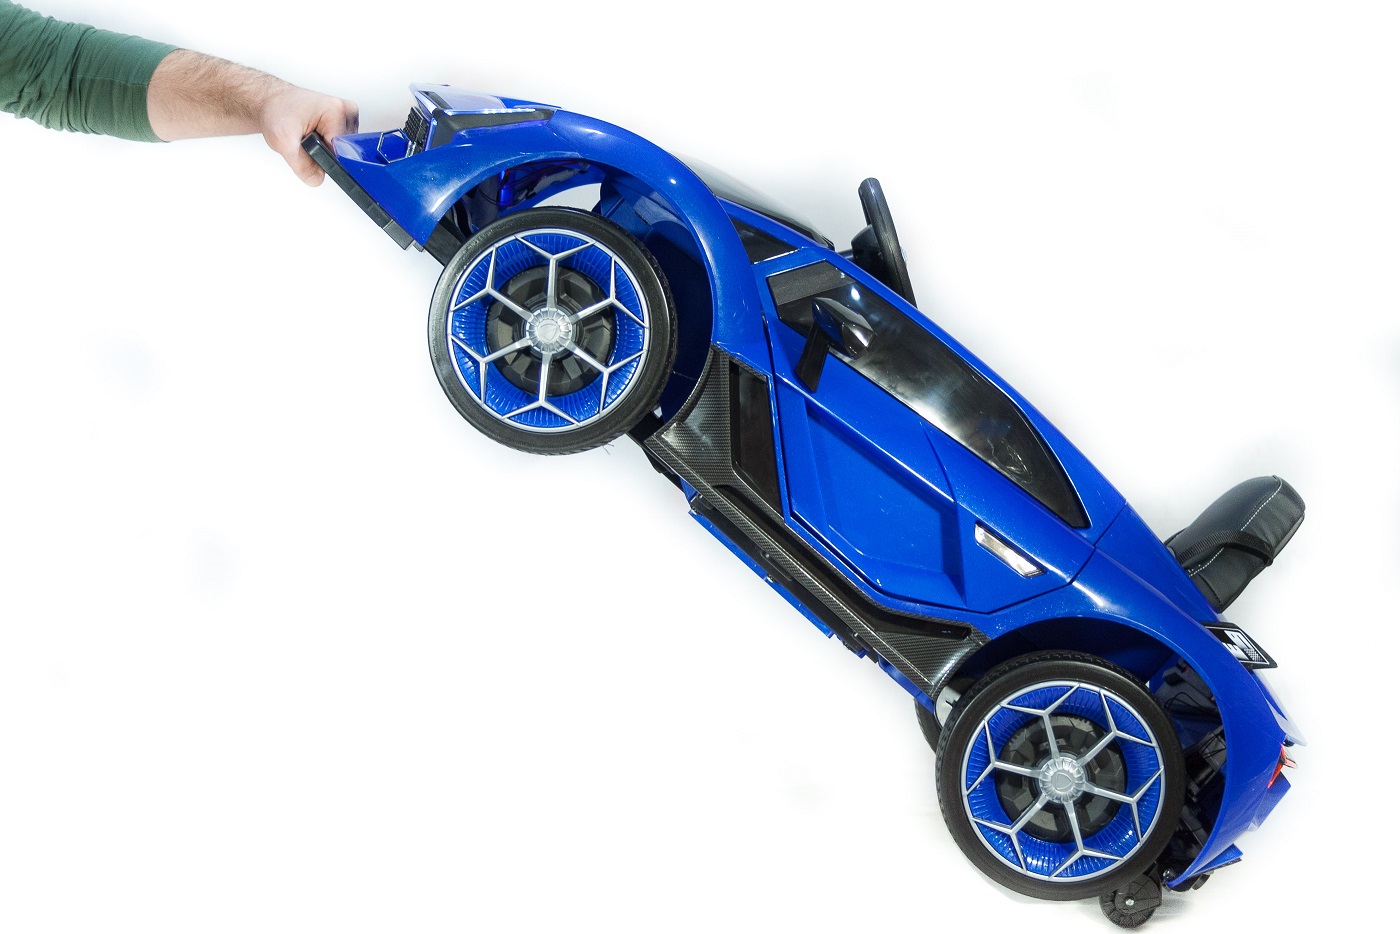 Электромобиль ToyLand Lamborghini YHK2881 синего цвета 